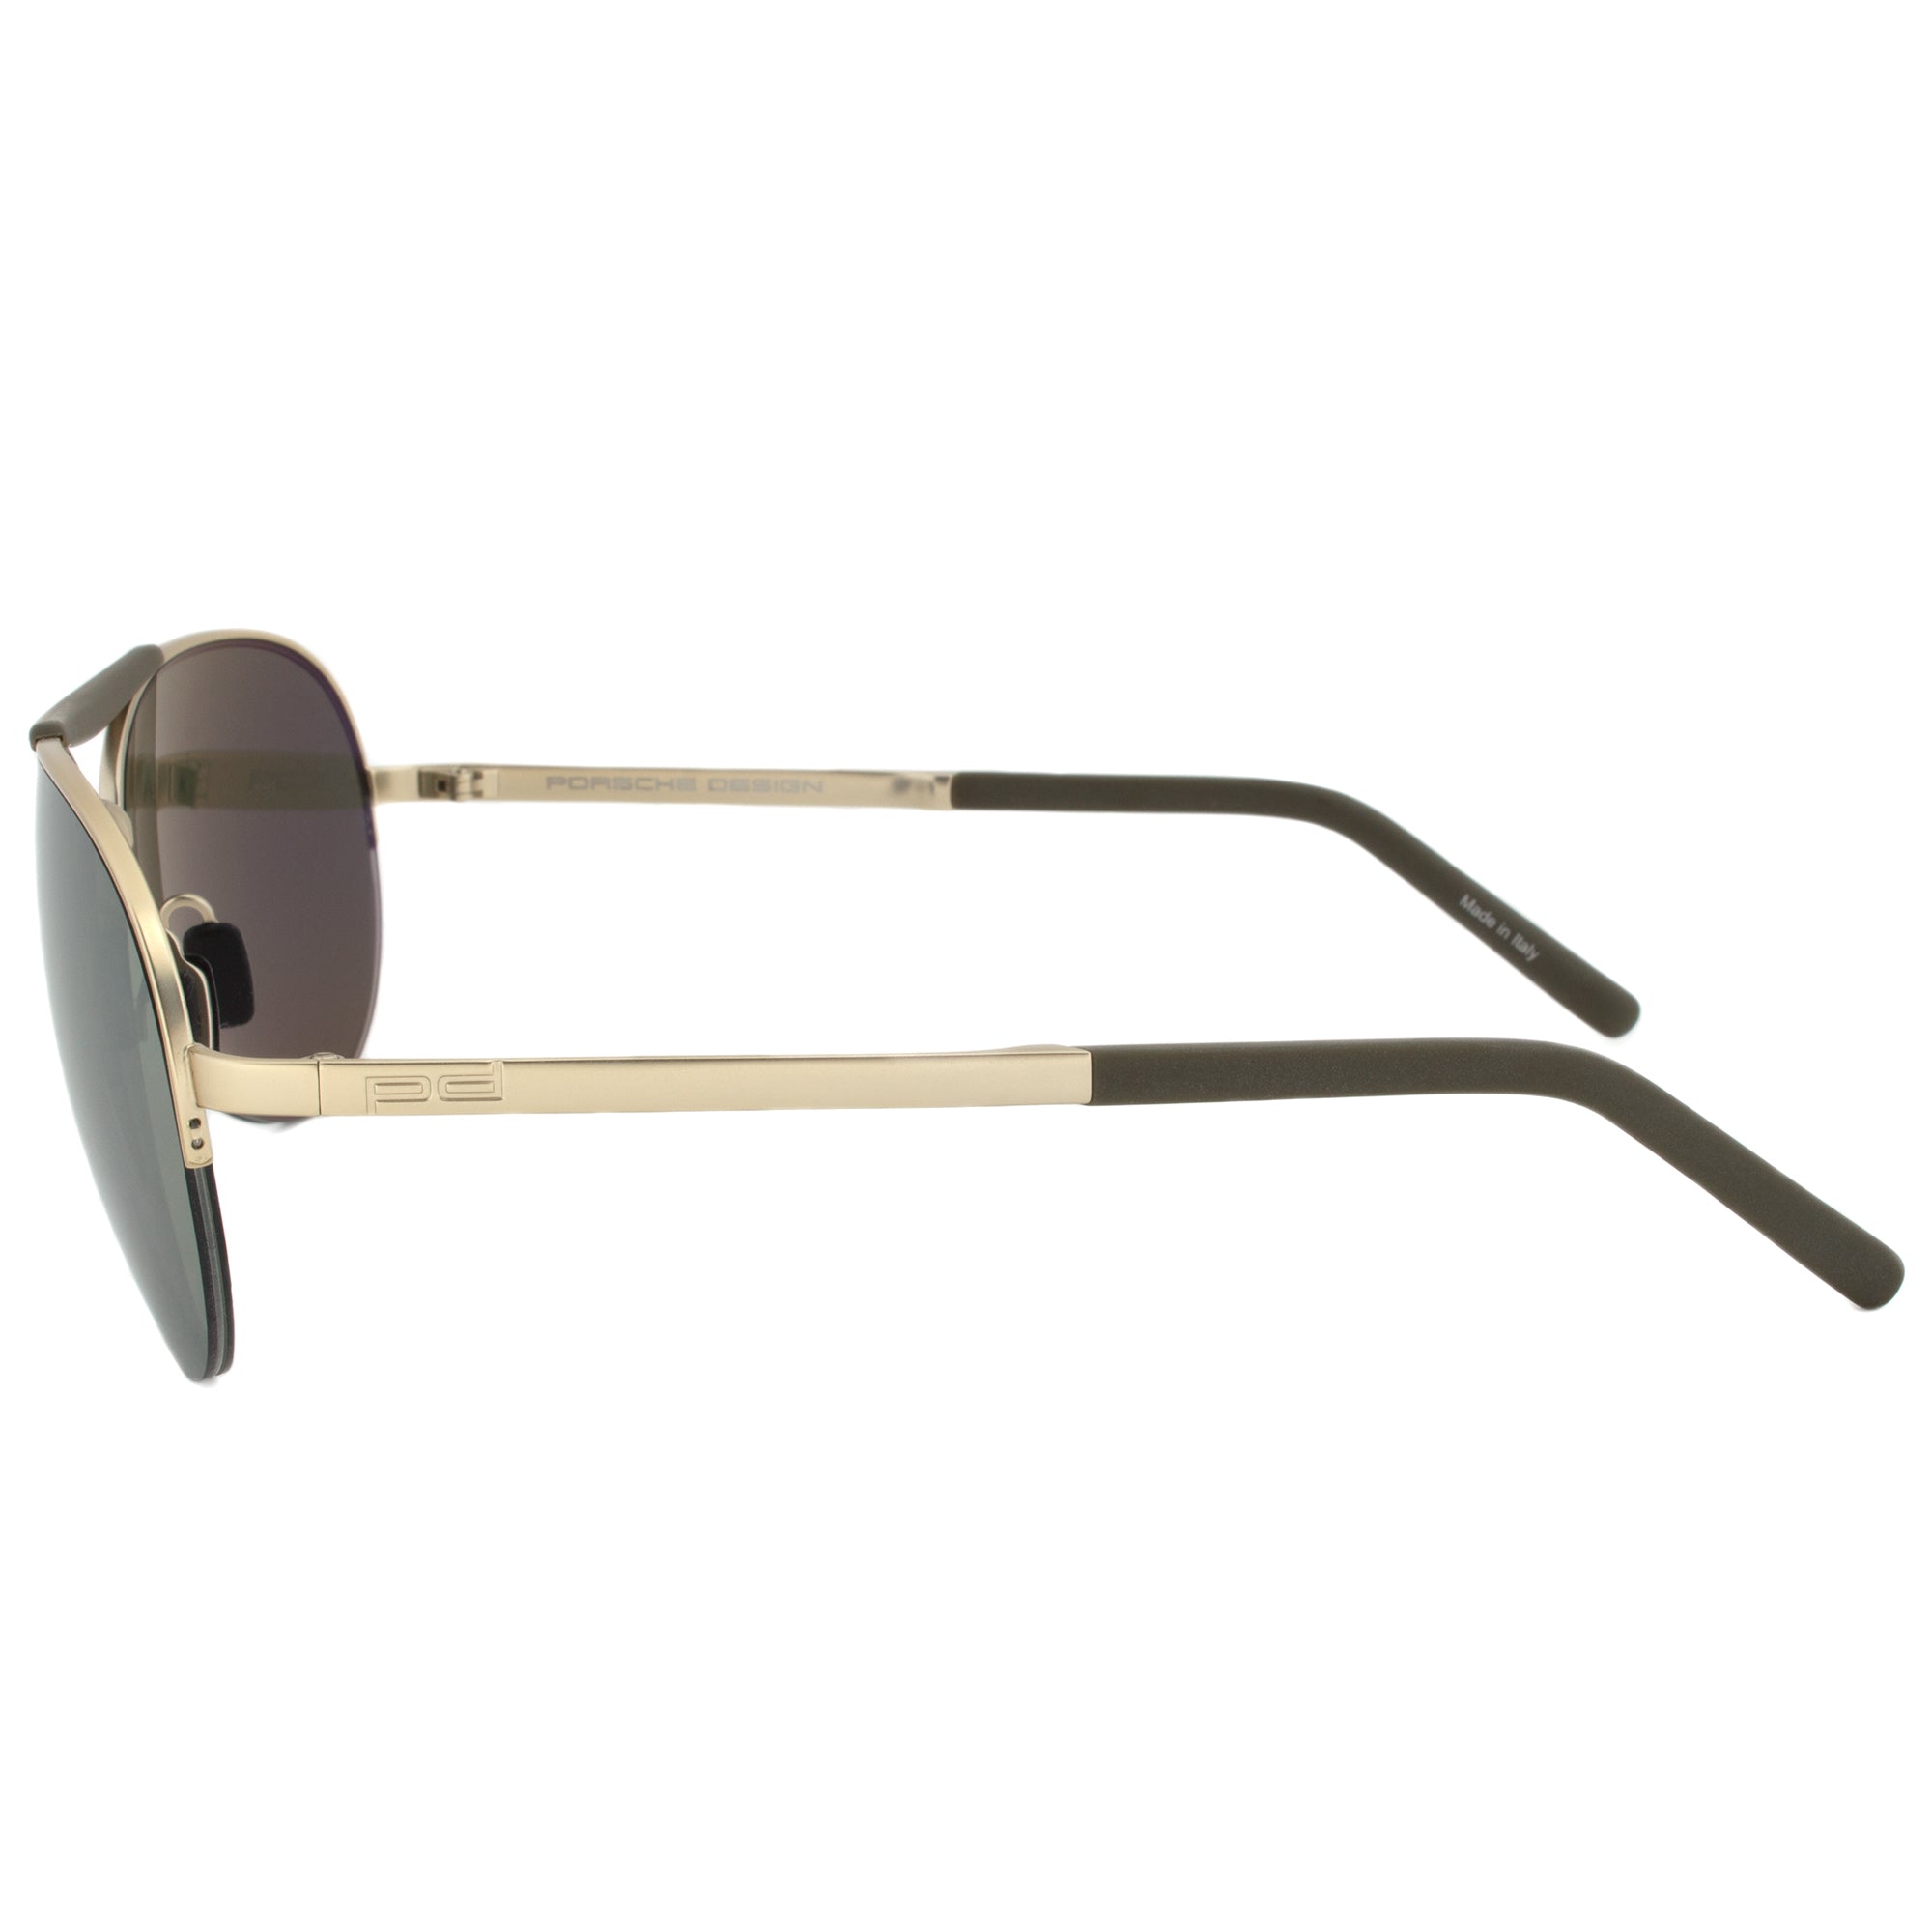 Porsche Design P8540 C Aviator Sunglasses | Light Gold Frame | Olive Silver Mirror Lens